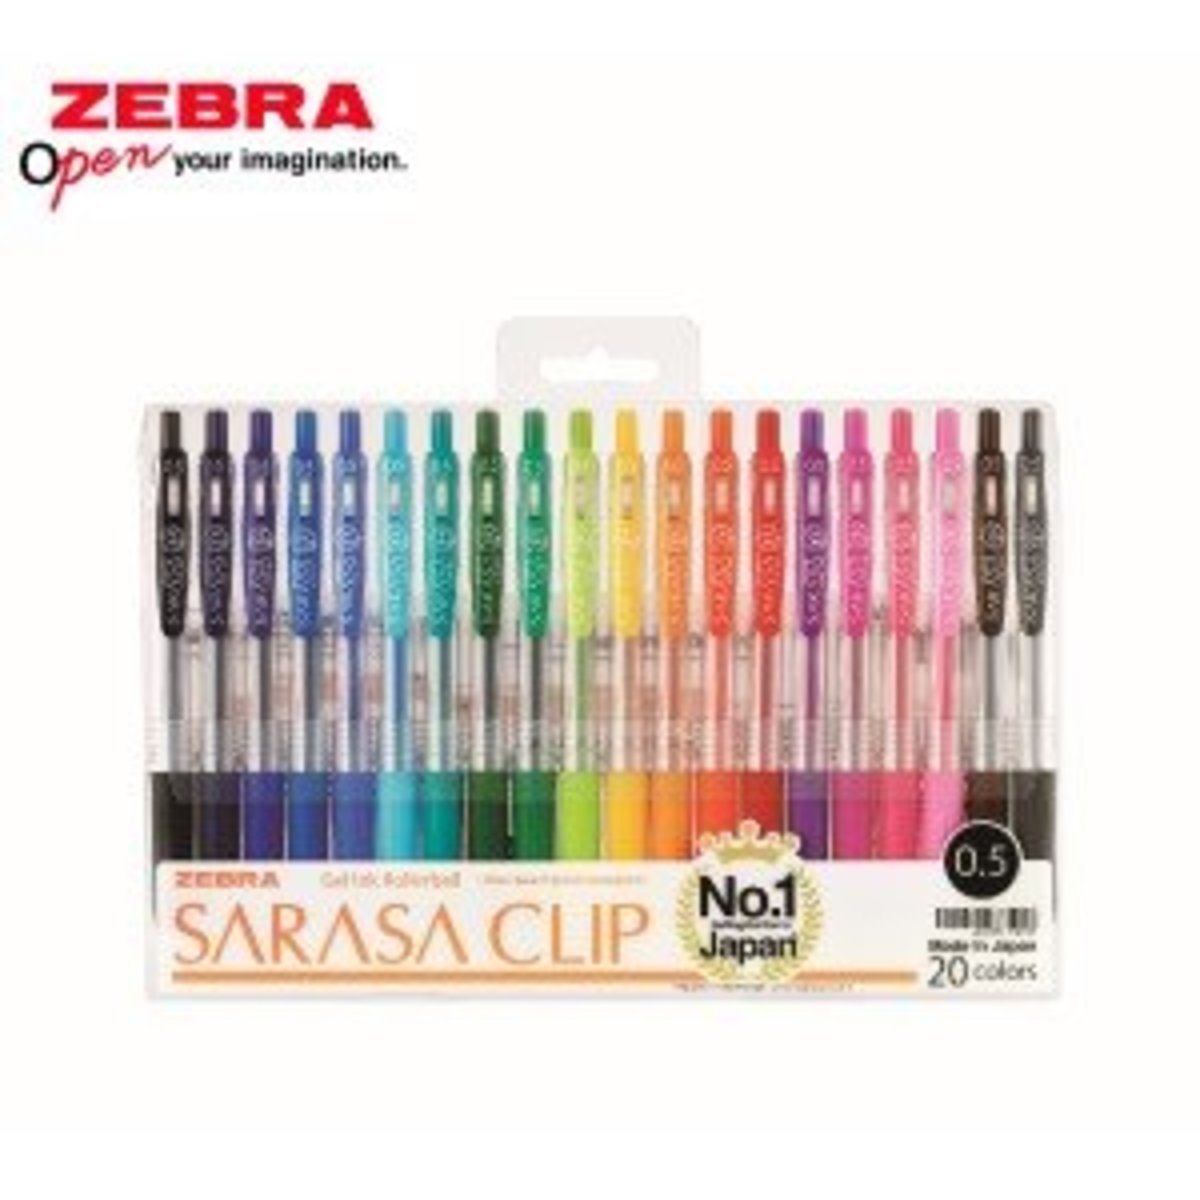 ZEBRA SARASA Clip   JJ15 - 20CA   0.5mm   啫喱筆  20 色套裝